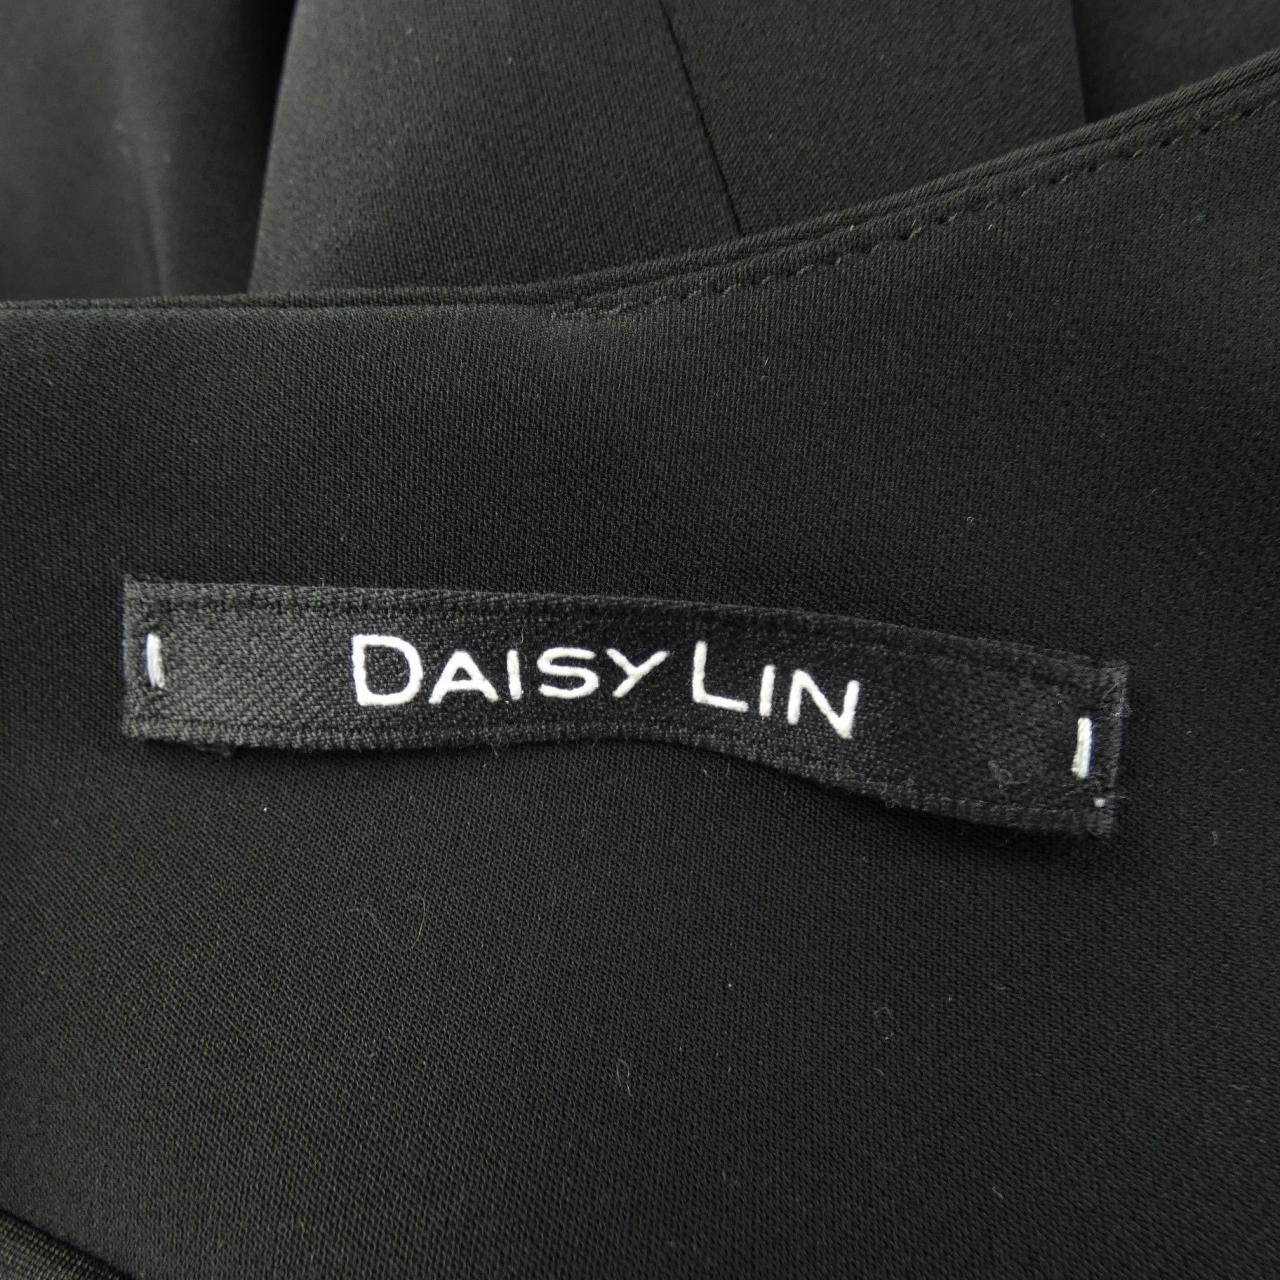 Daisy Lynn DAISY LIN dress